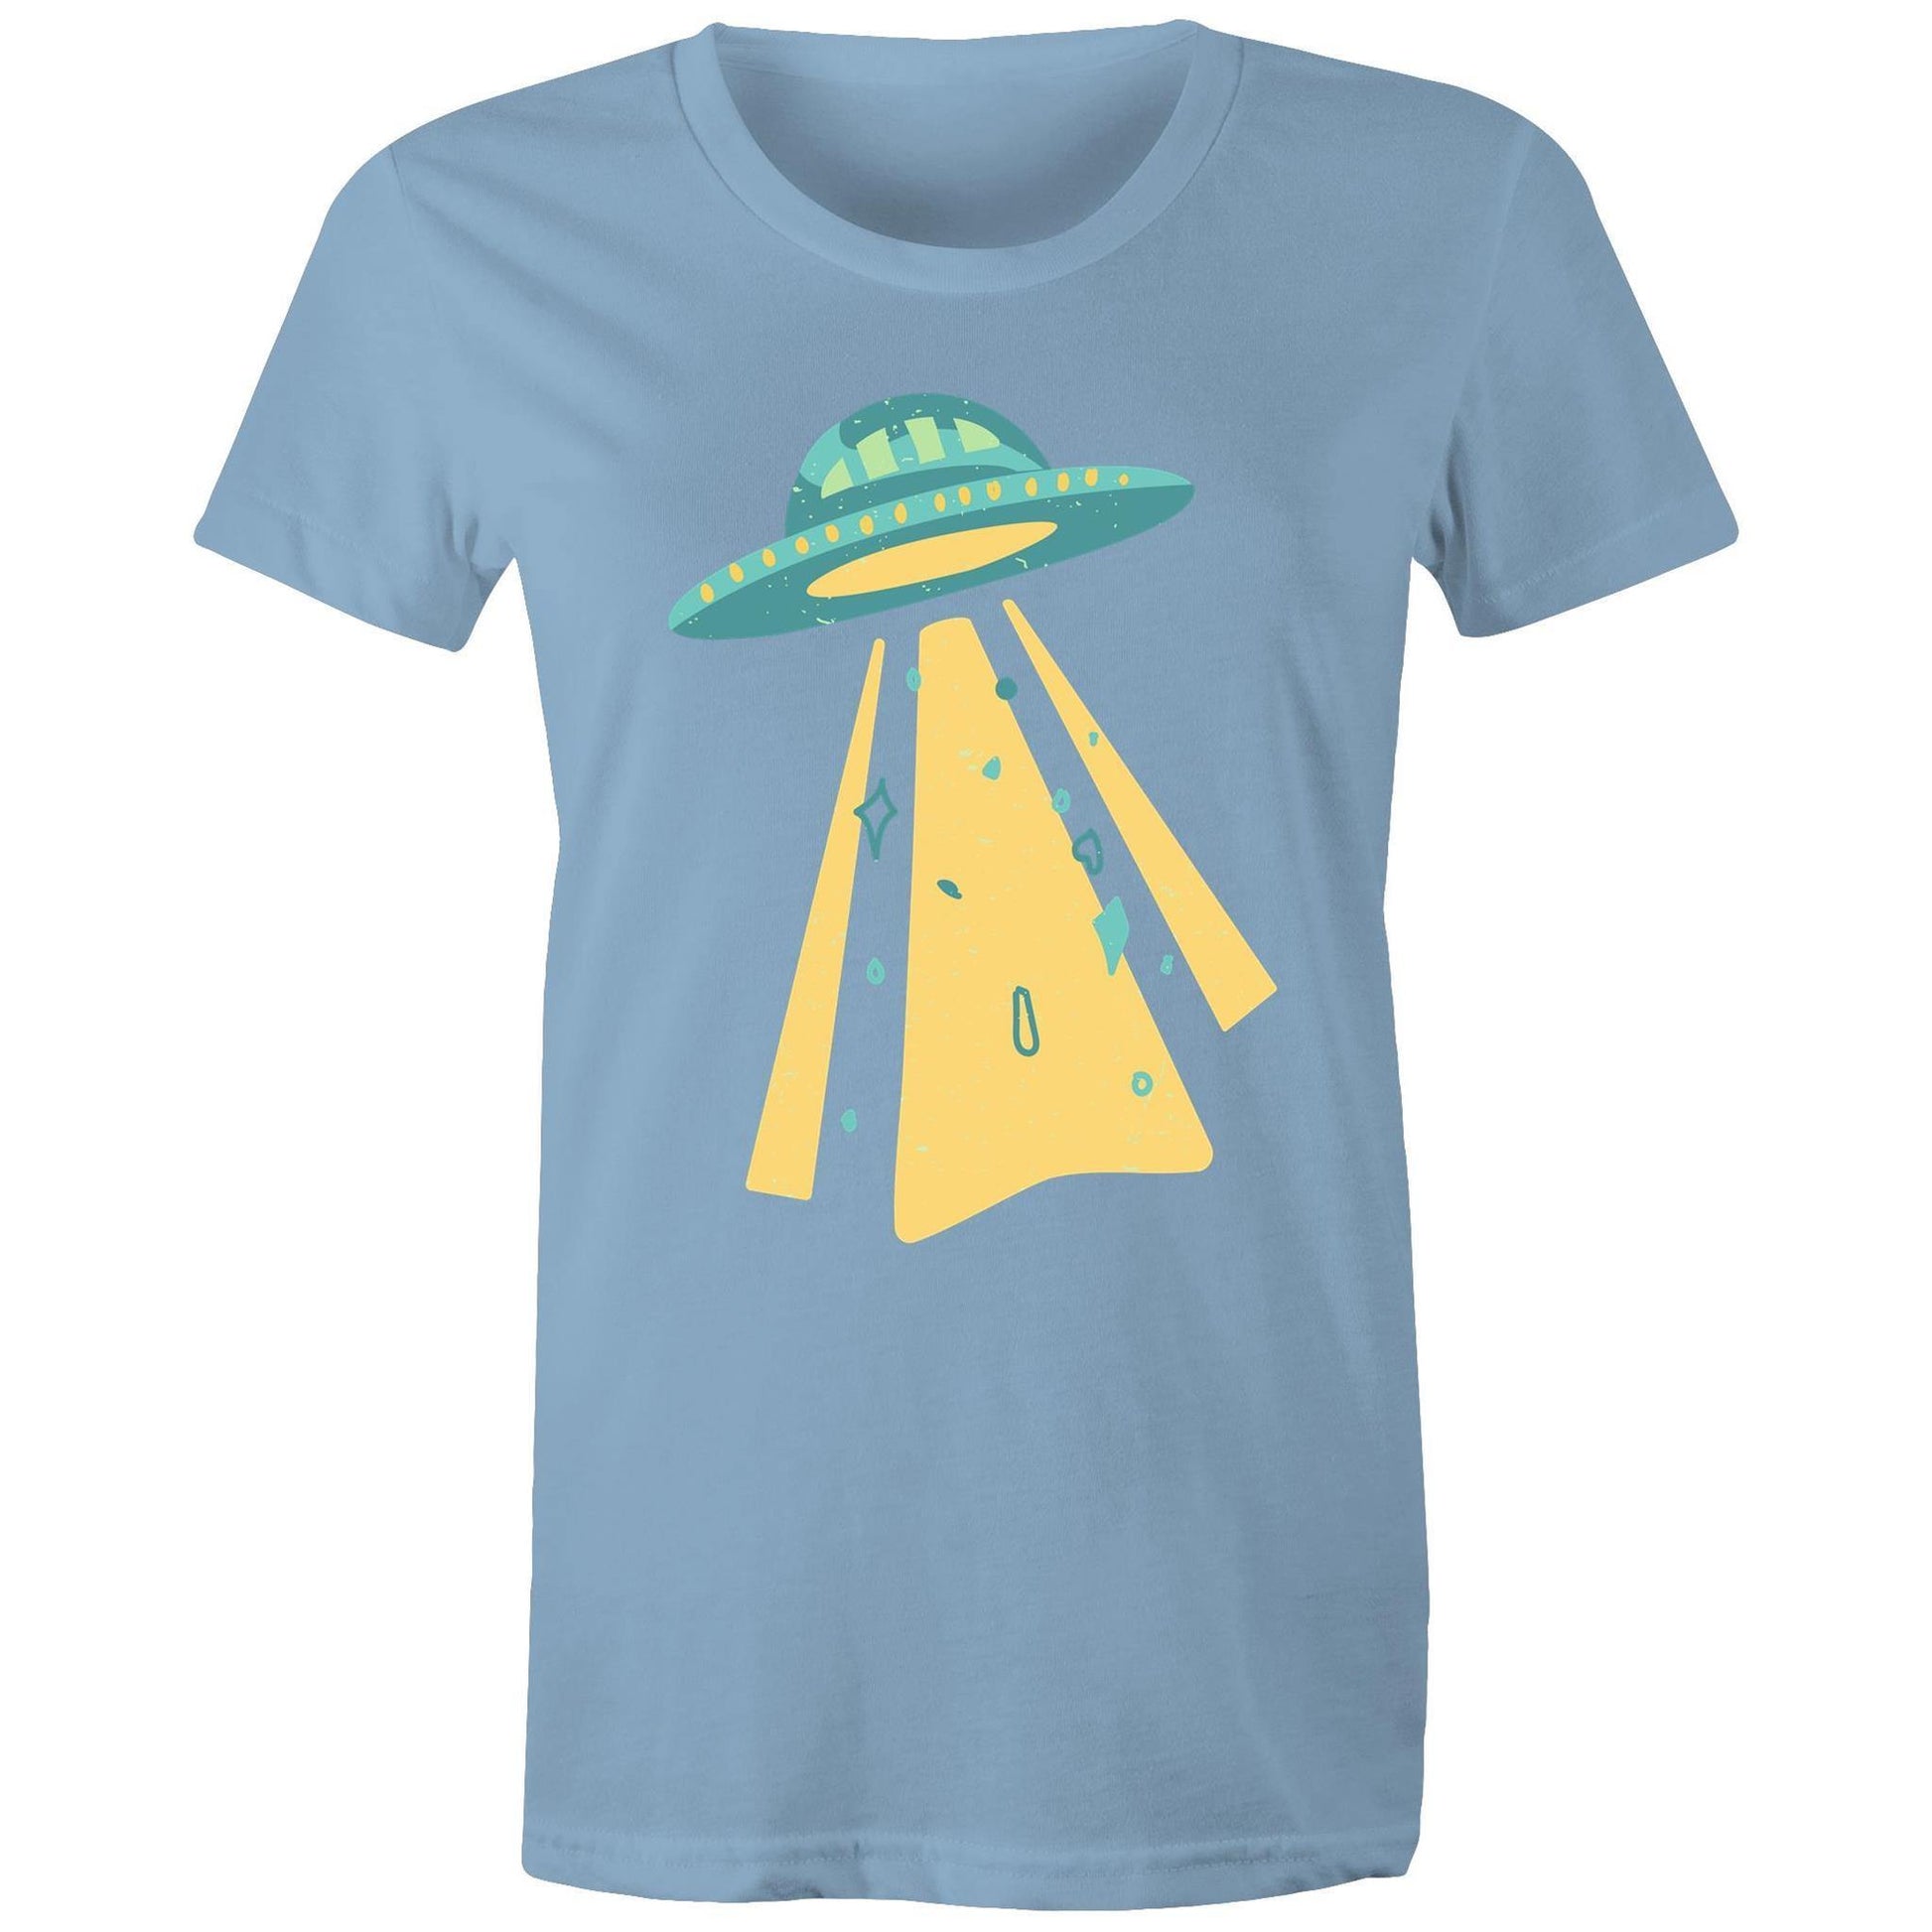 UFO - Women's Maple Tee Carolina Blue Womens T-shirt Retro Sci Fi Space Womens